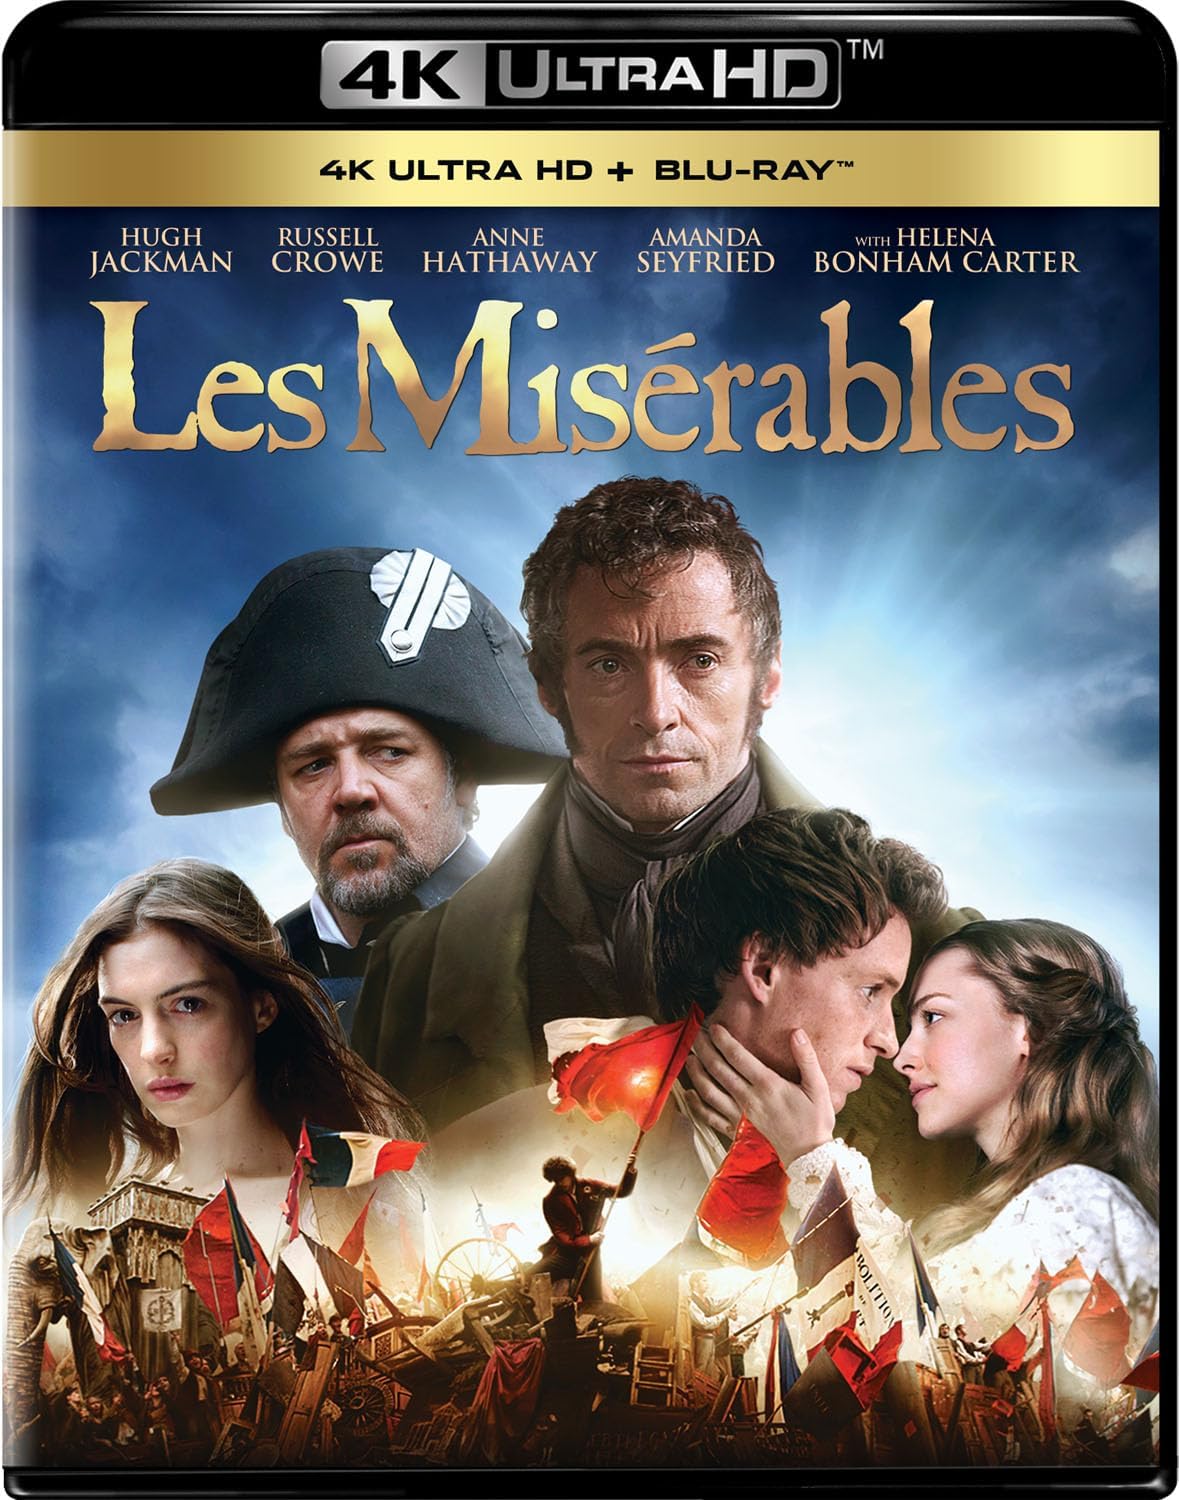 Les Misérables (2012) - 4K Ultra HD + Blu-ray